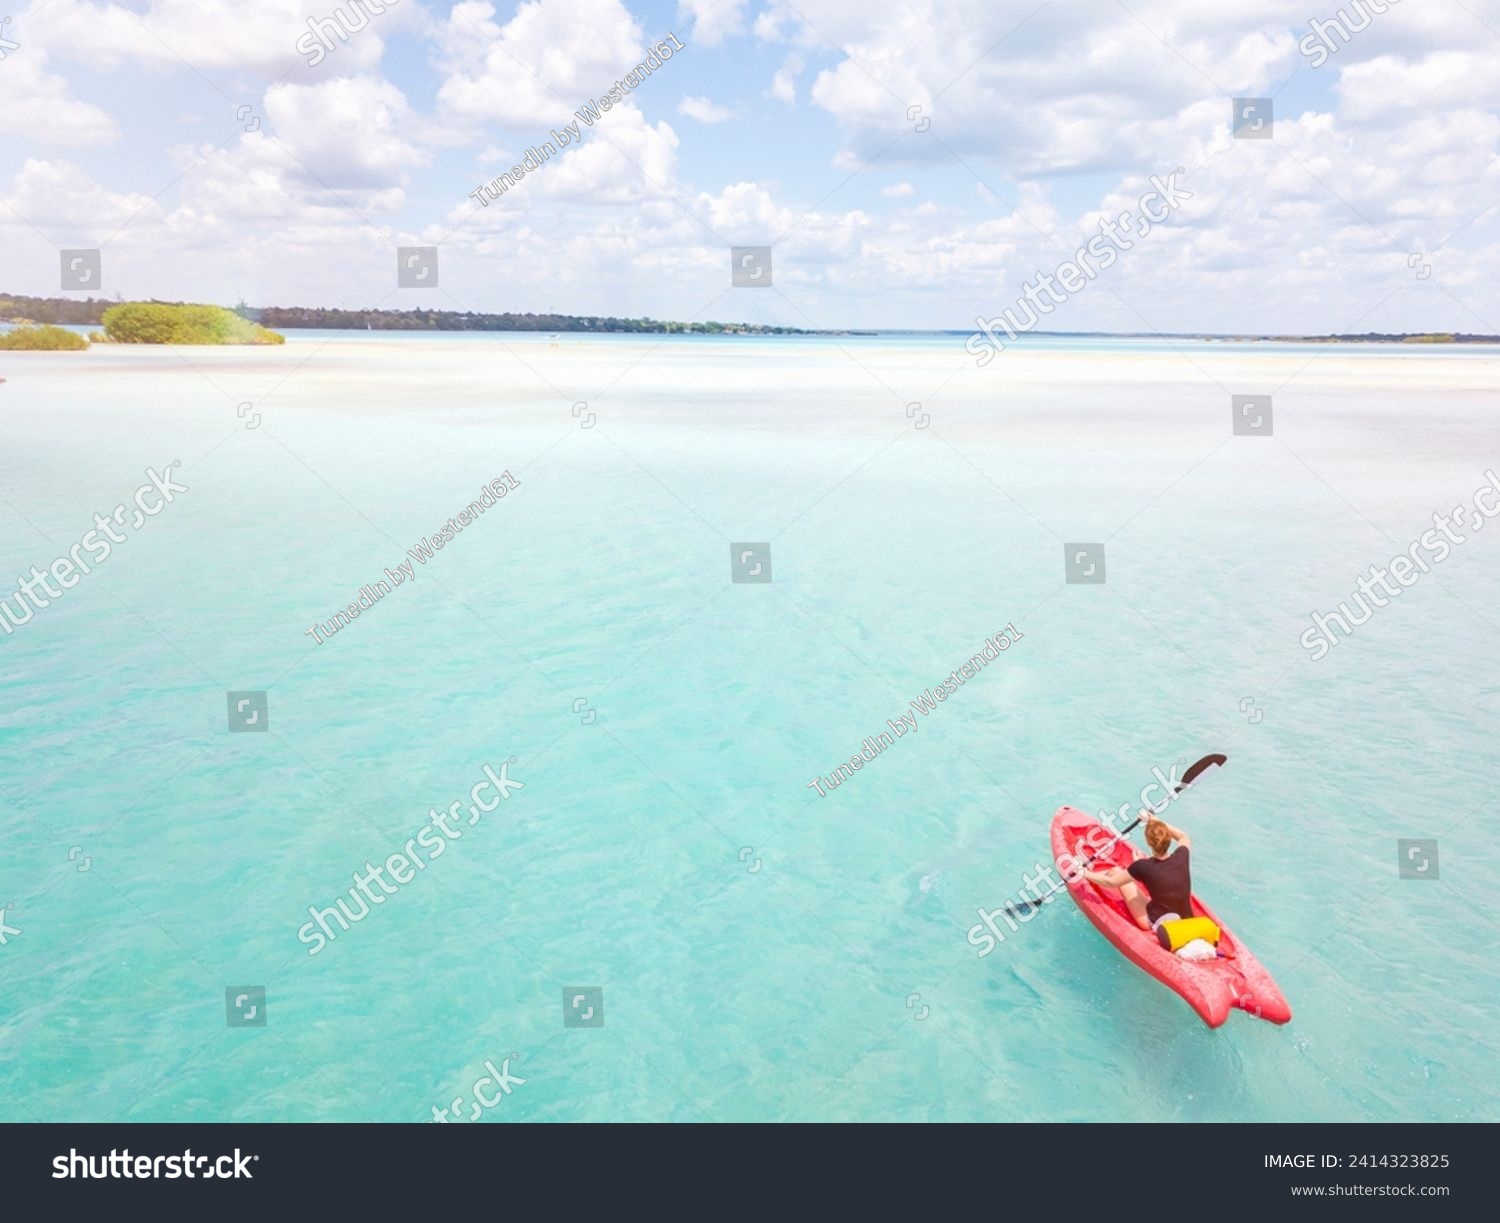 Mexiko- yucatan- quintana roo- bacalar- woman in kayak on the sea in turquoise water- drone image #2414323825